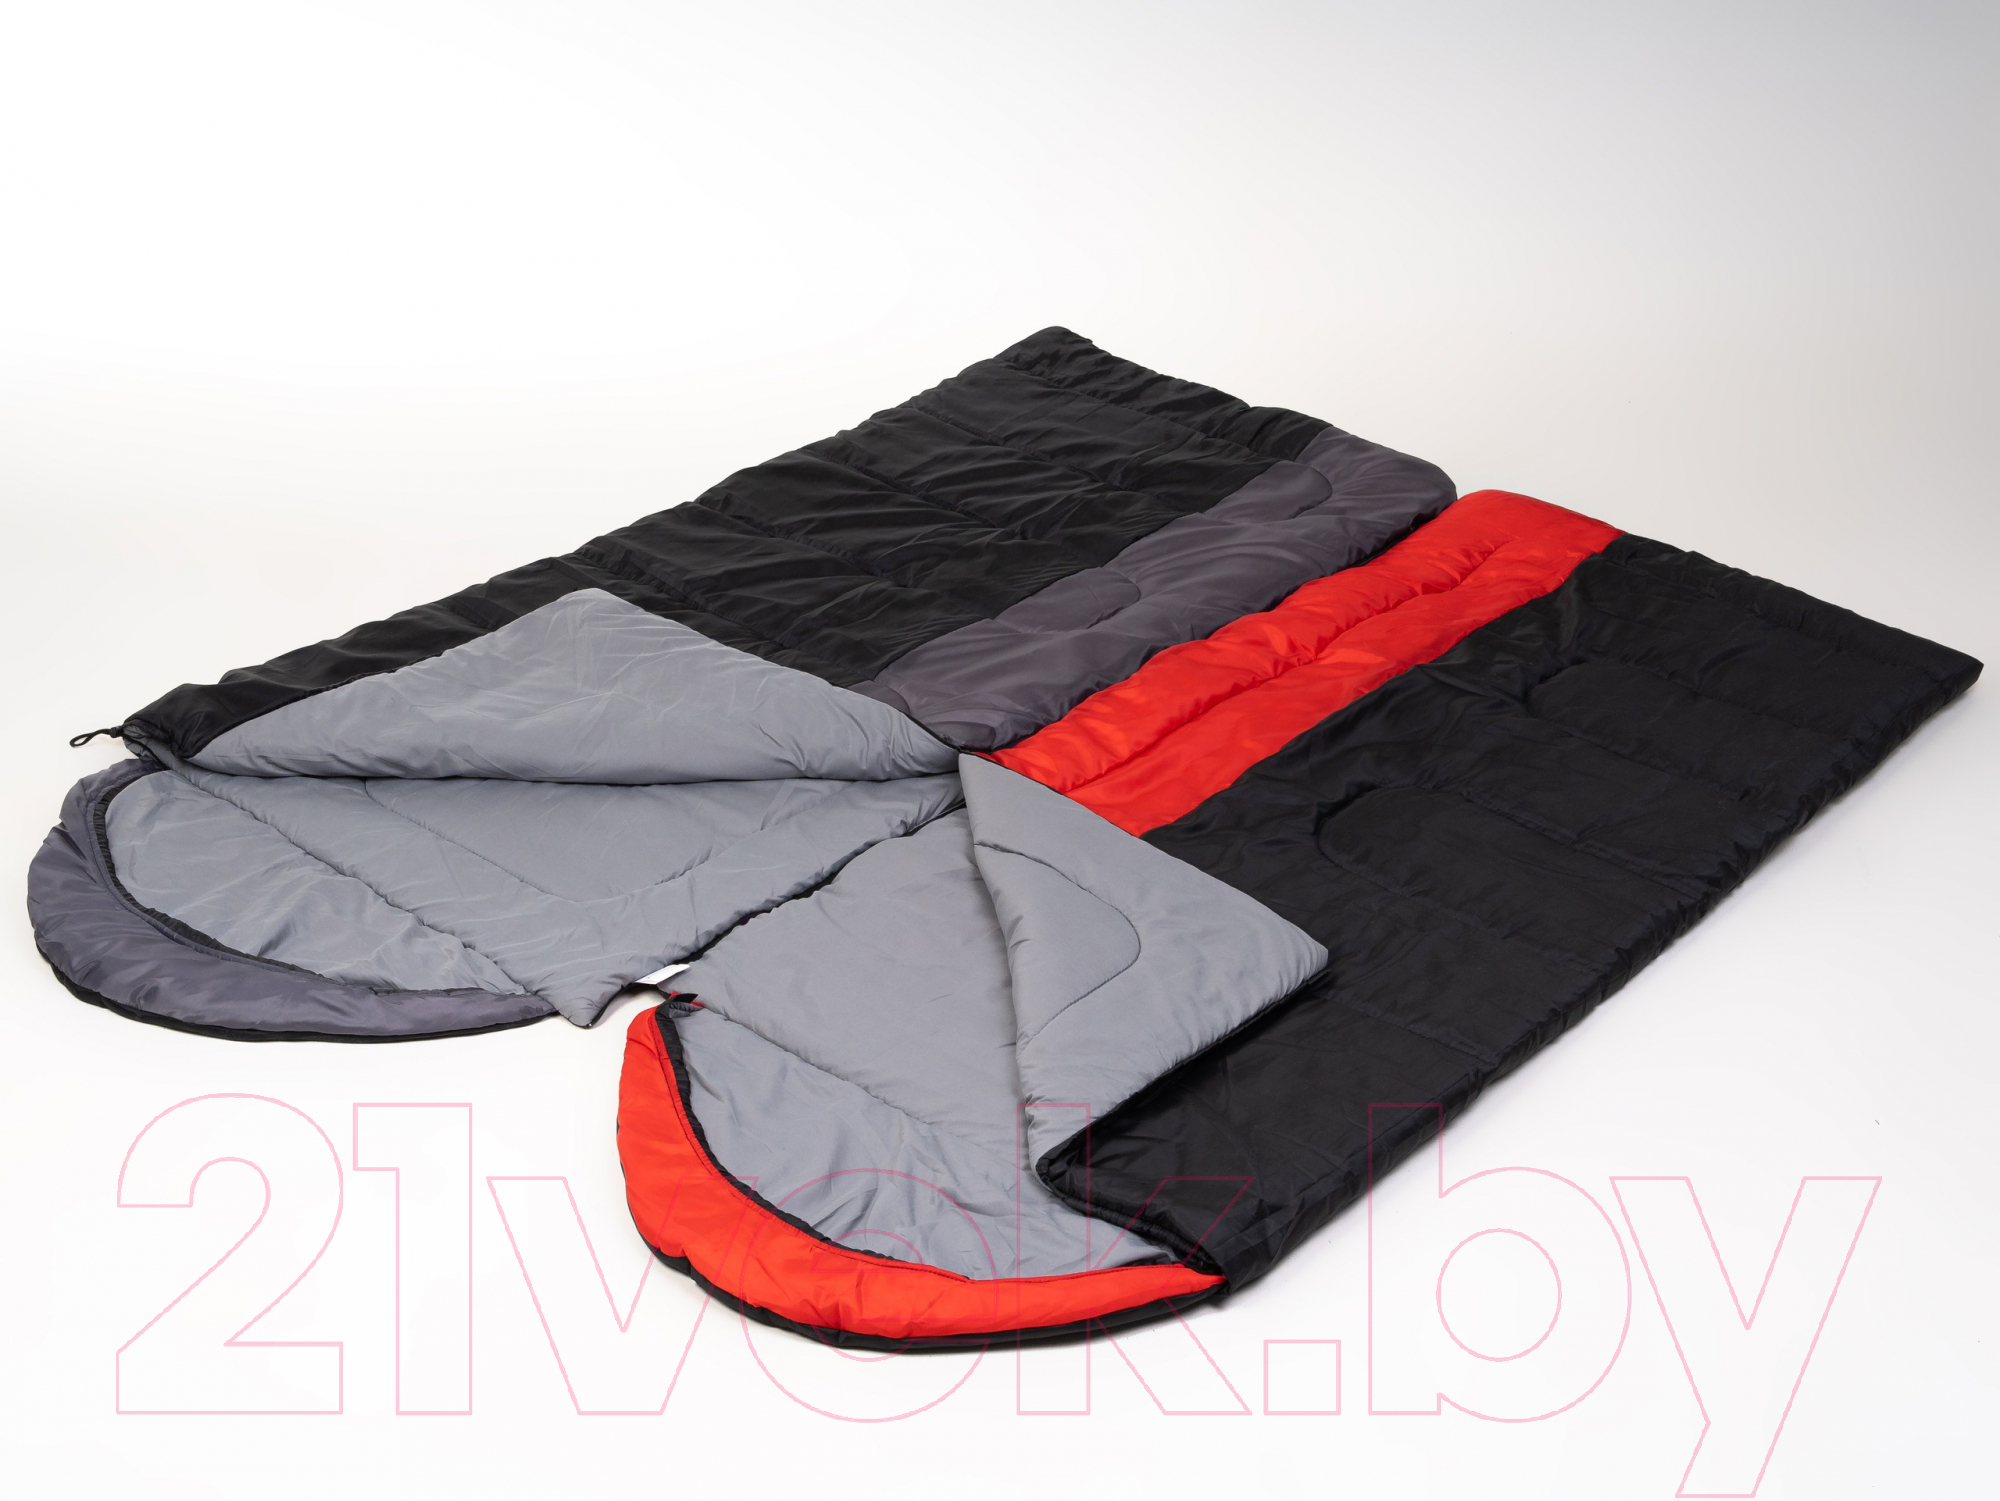 Спальный мешок BalMAX Аляска Camping Plus Series до -5°C R правый